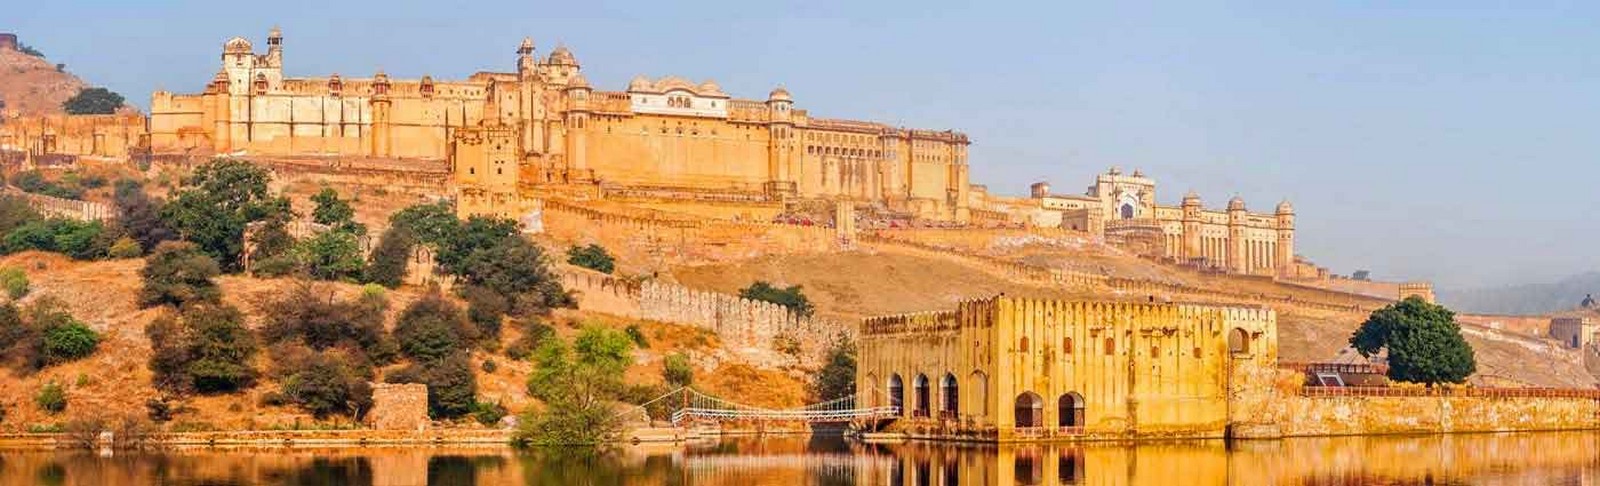 Heritage architecture - Jaipur - Sheet1